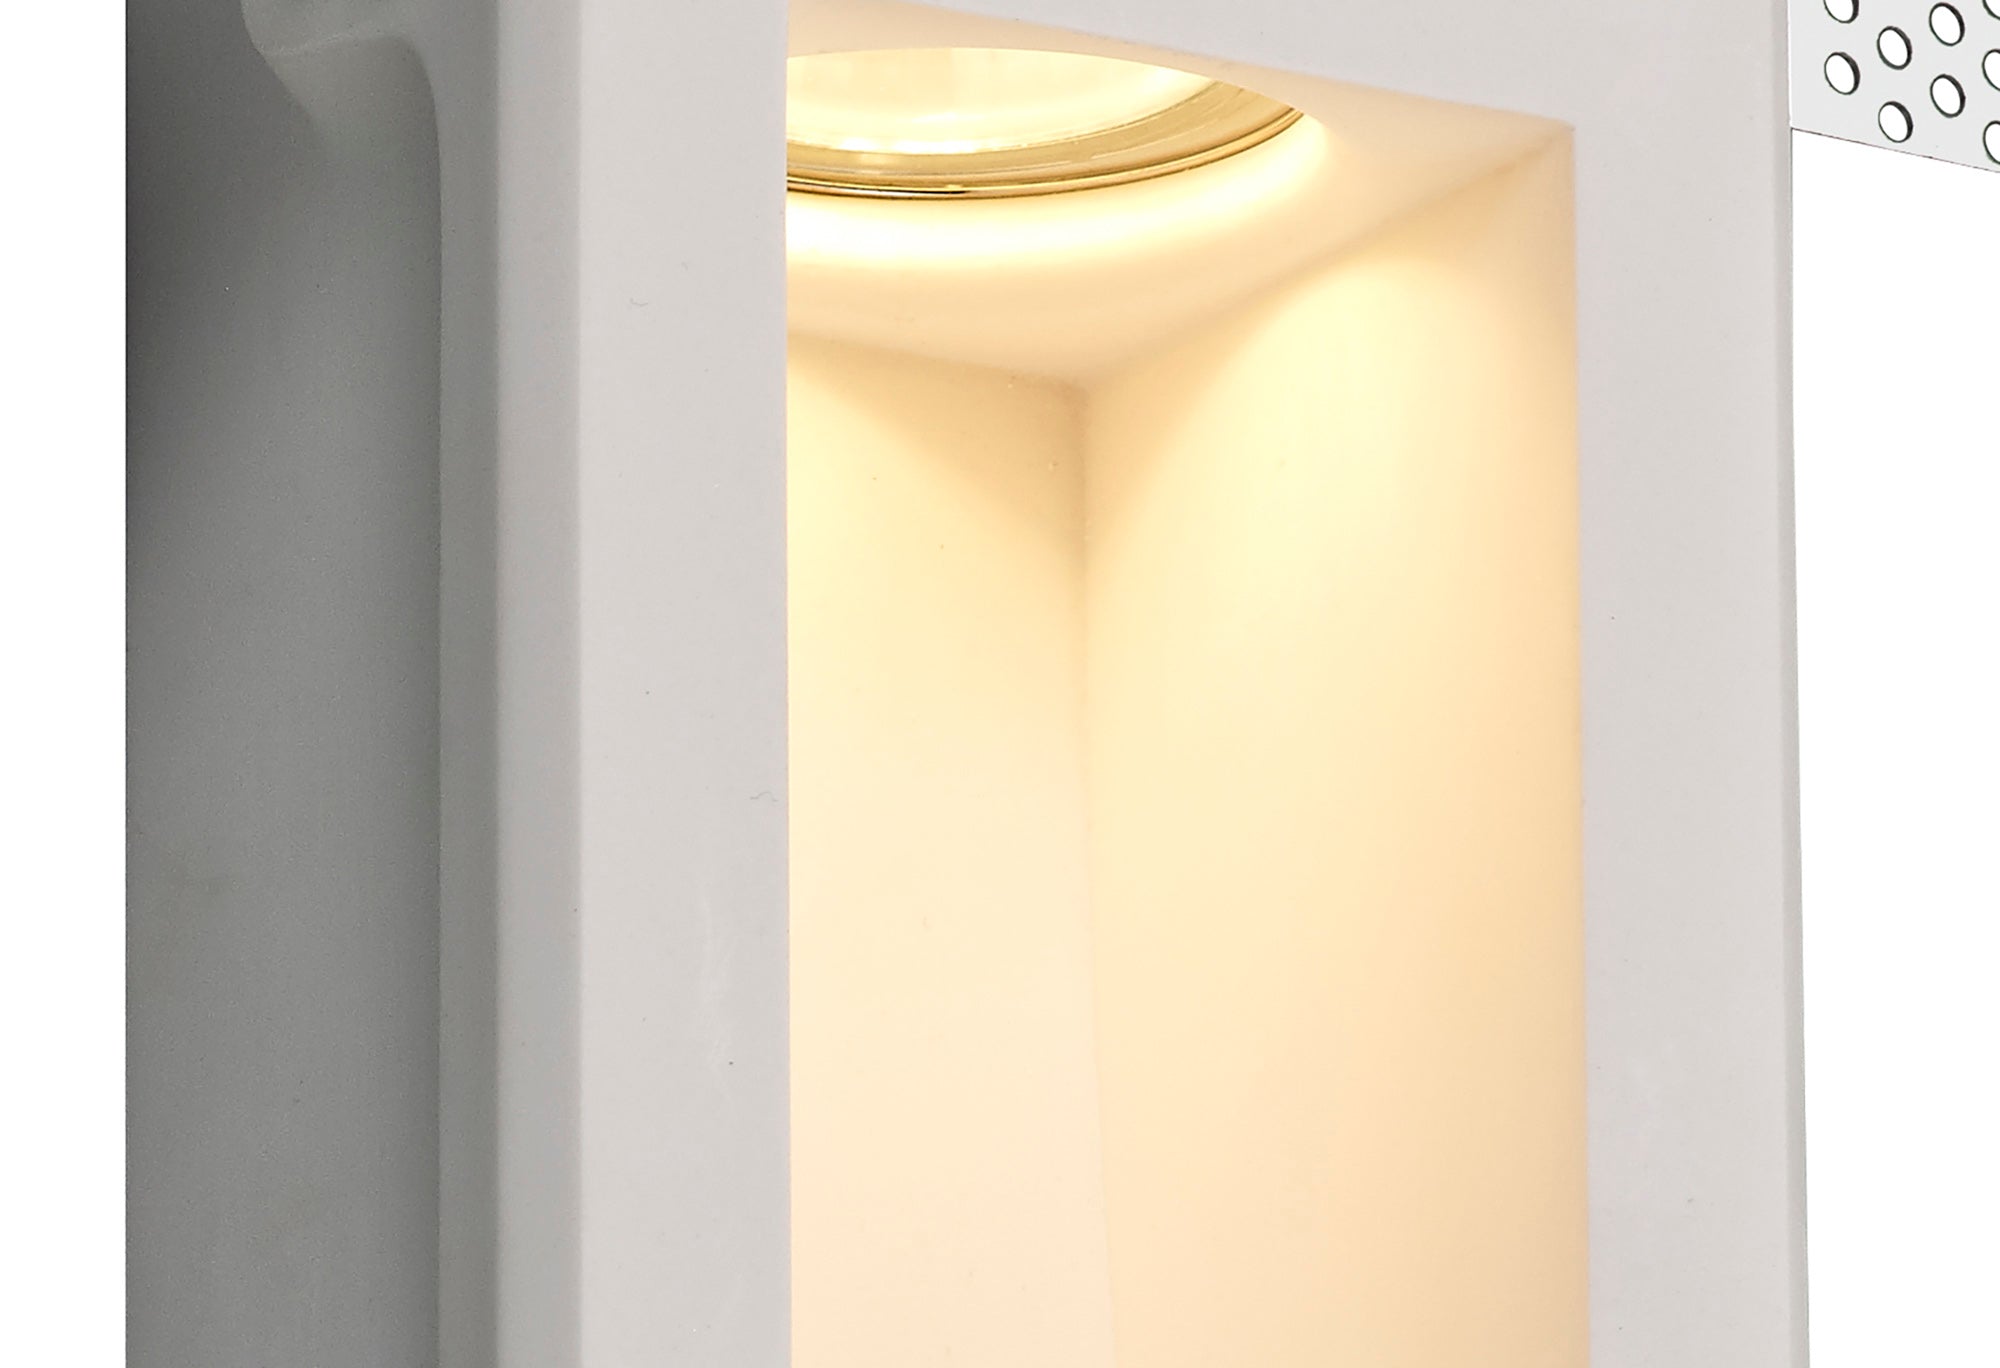 Plastin Medium Recessed Wall Lamp, 1 x GU10, White Paintable Gypsum, Cut Out: L:353mmxW:103mm